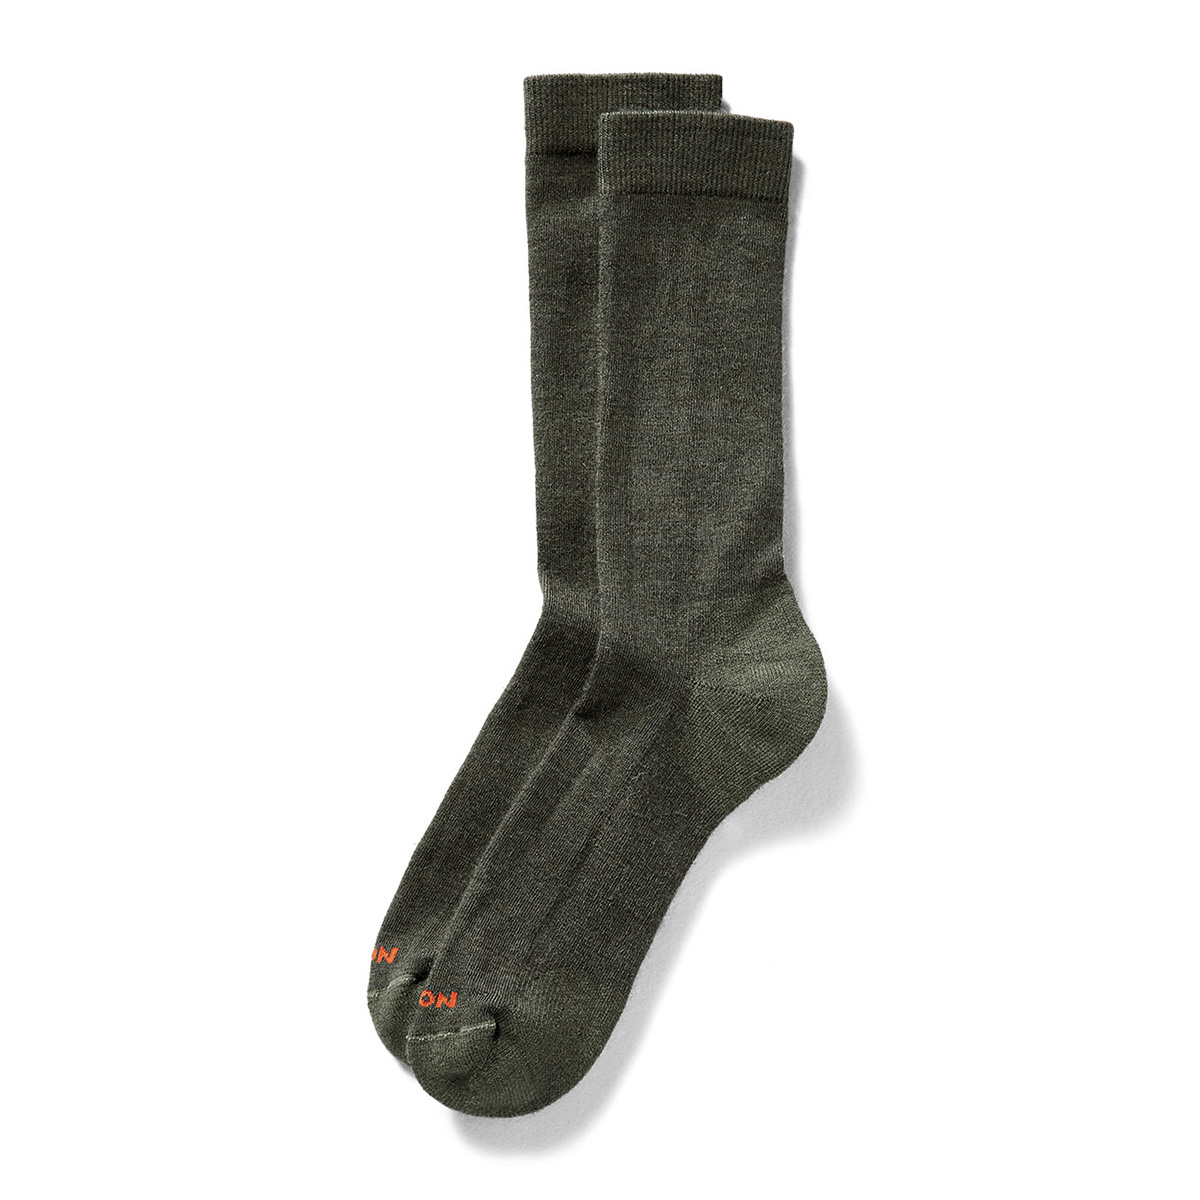 Filson Everyday Crew Sock Green, versatile socks made of a merino wool blend